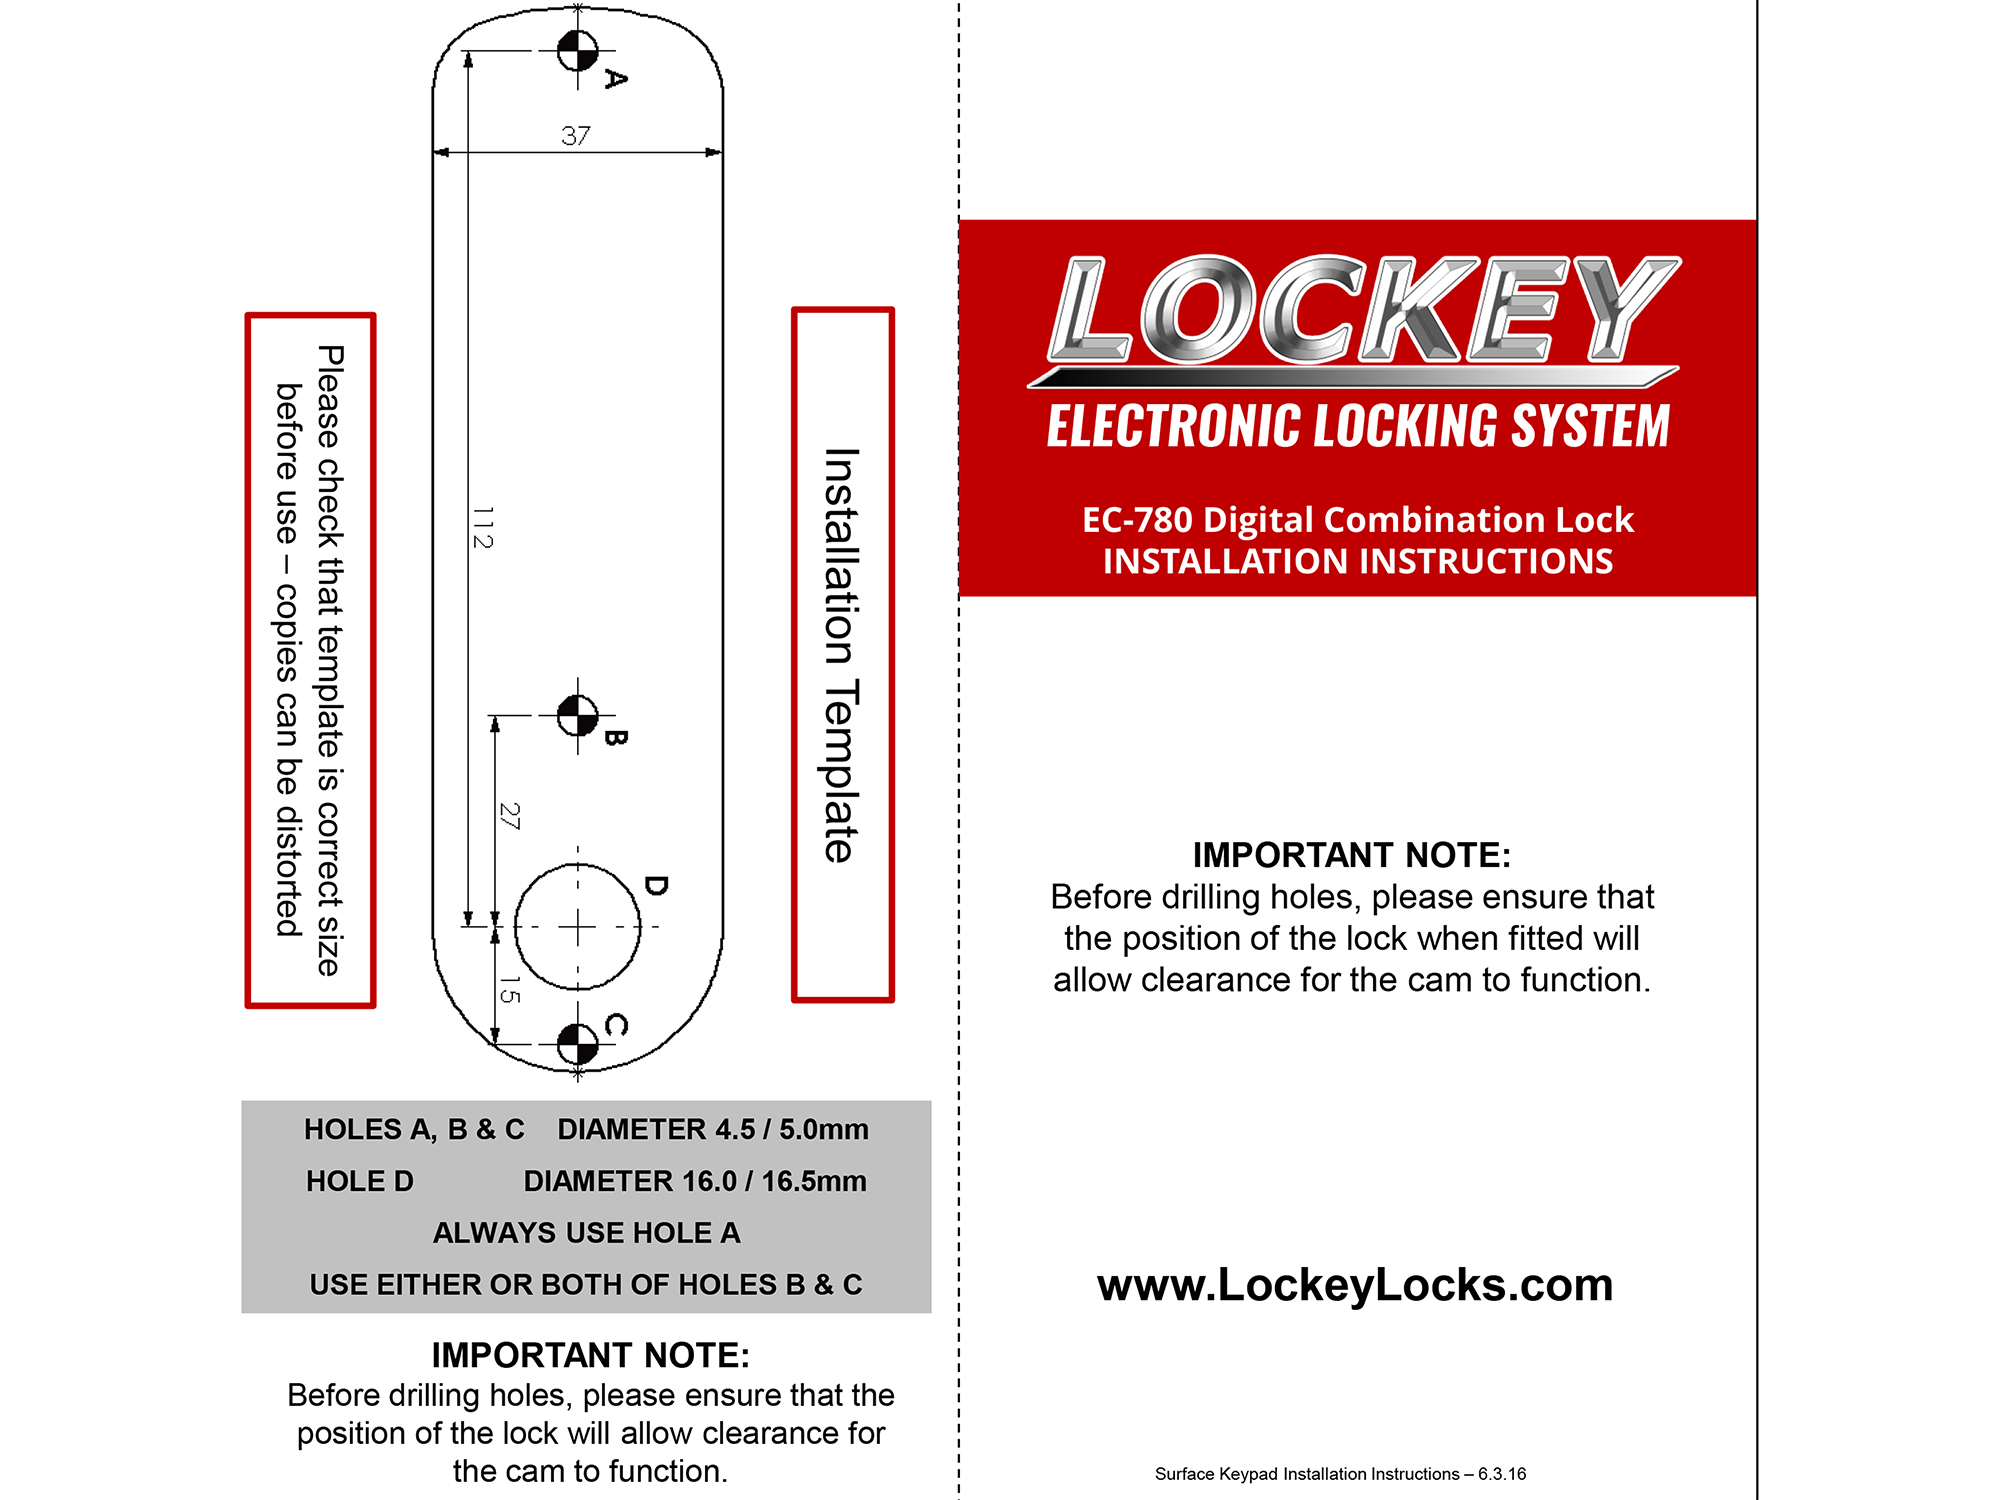 Lockey EC785 RFID Flush Fit Cabinet/Locker Cam Lock